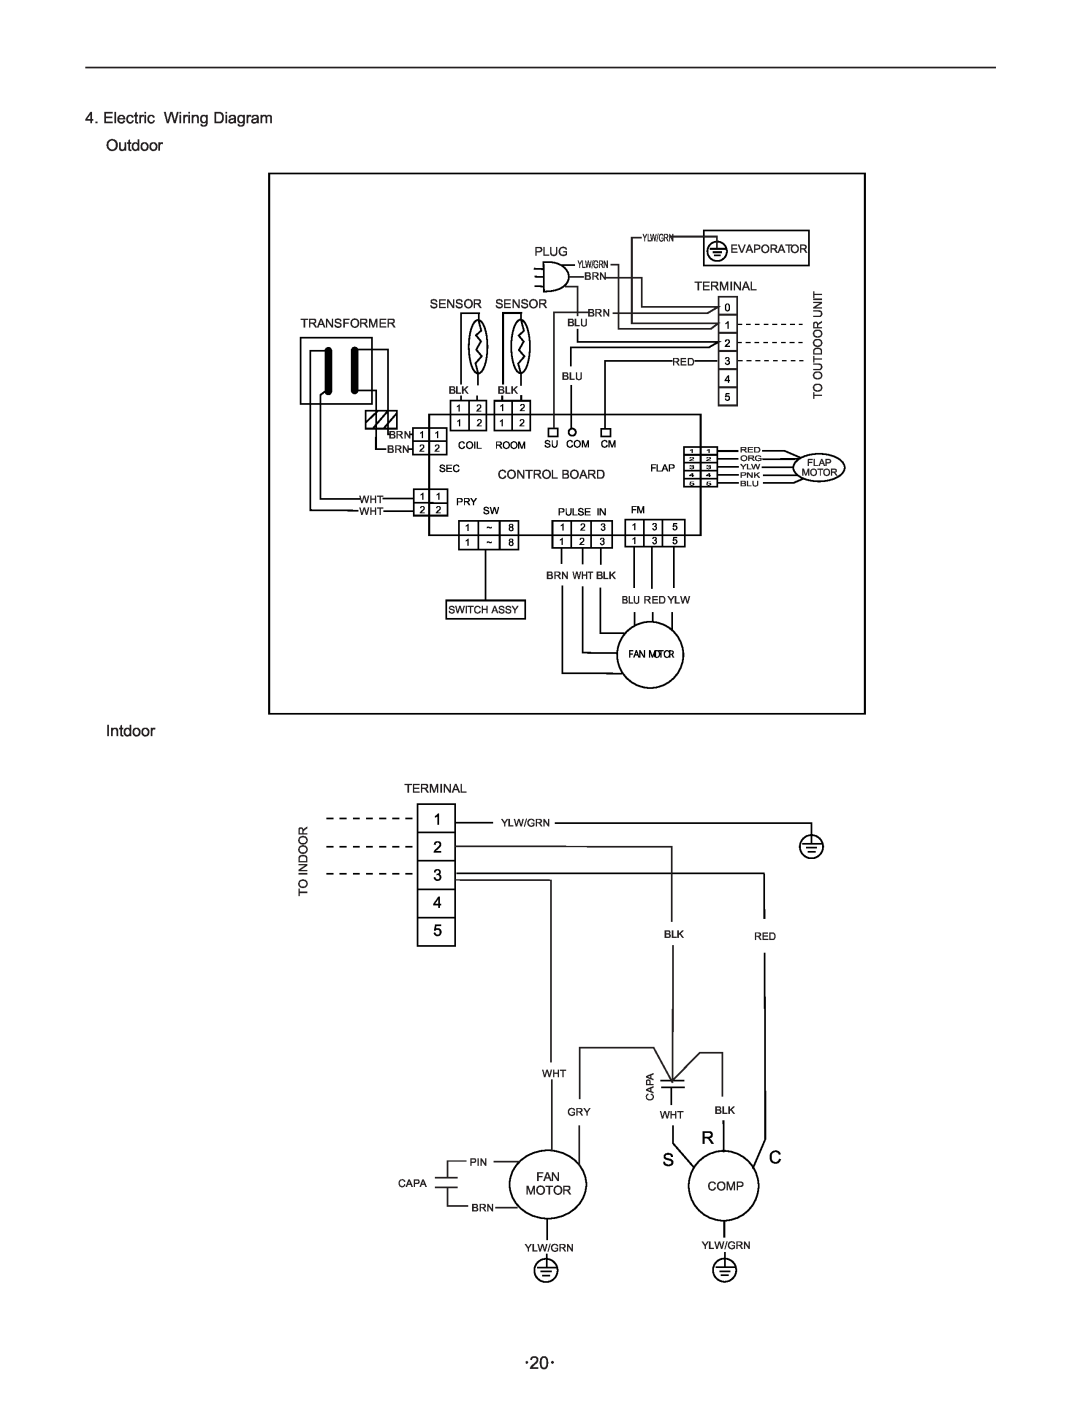 Hisense Group KF 346GWE instruction manual R Sc, Electric Wiring Diagram Outdoor, Intdoor, 2 3 4 5 